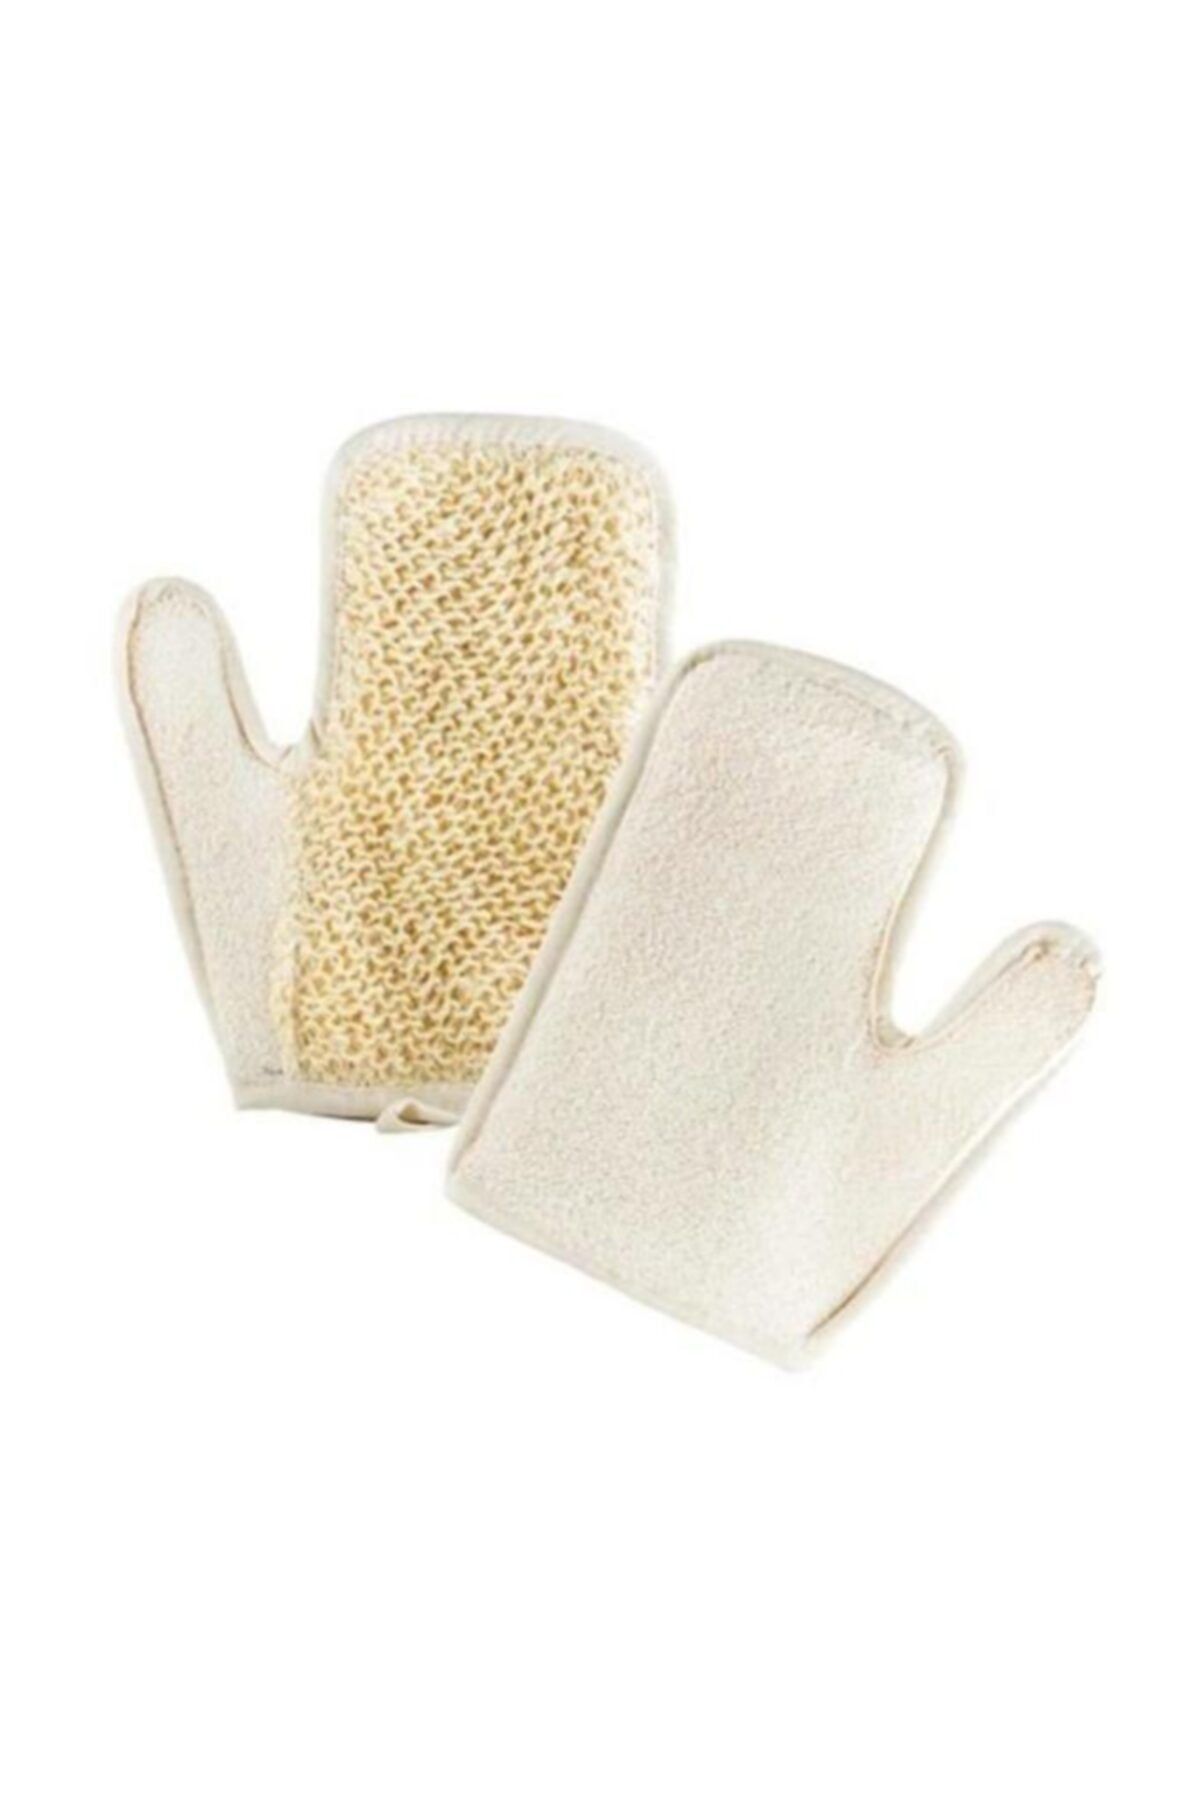 Fe Parmaklı Banyo Eldiveni Fingered Bath Glove